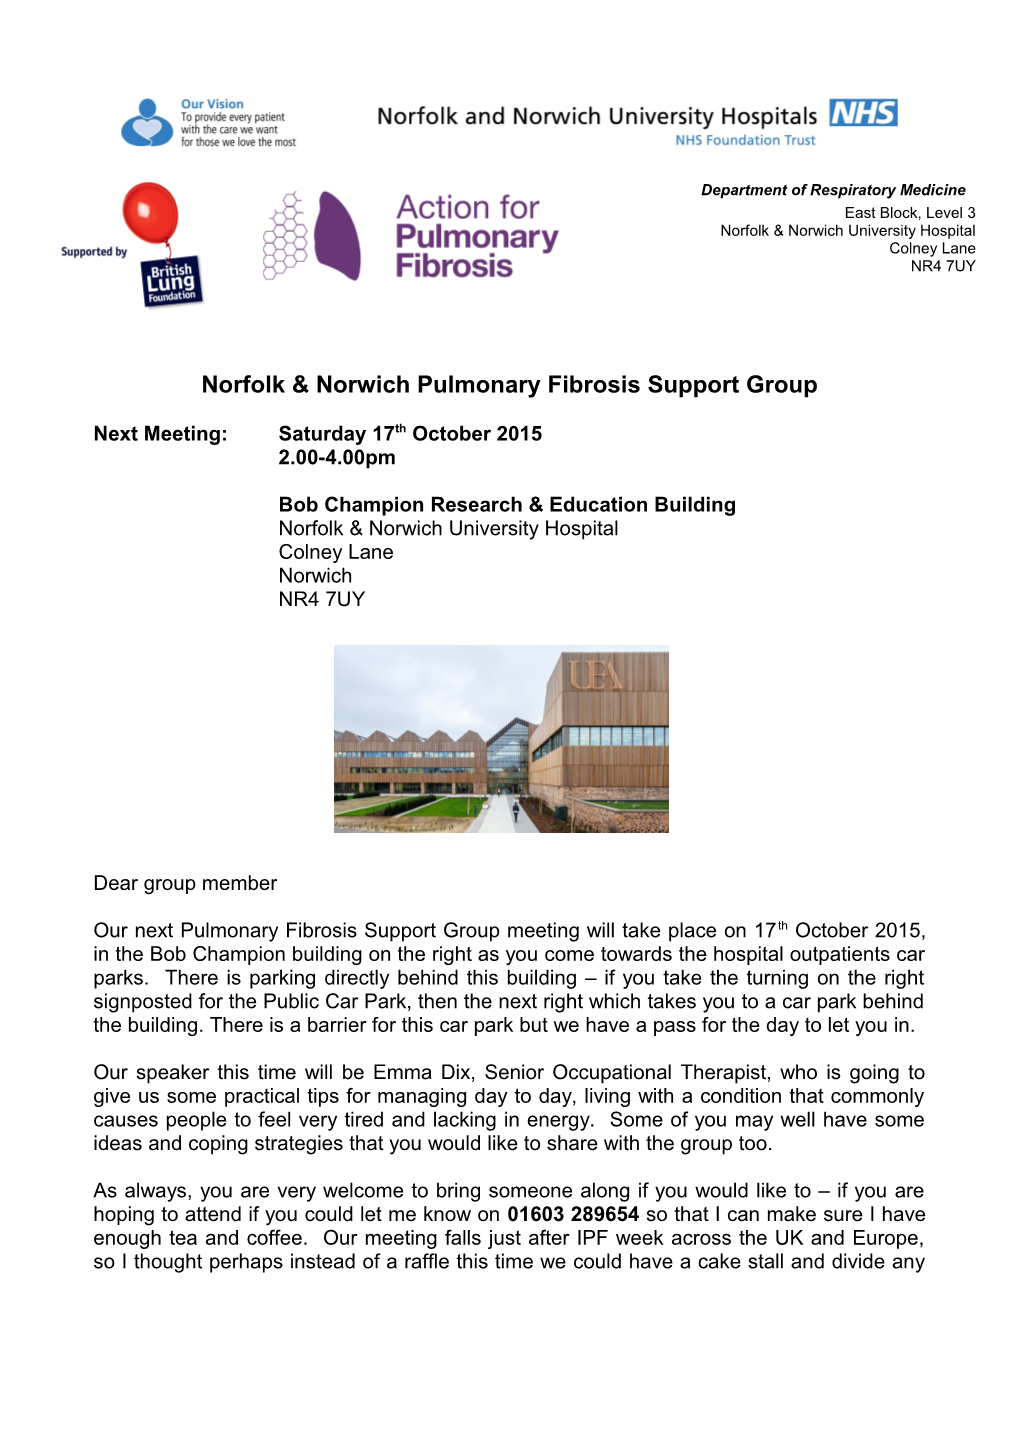 Norfolk & Norwich Pulmonary Fibrosis Support Group